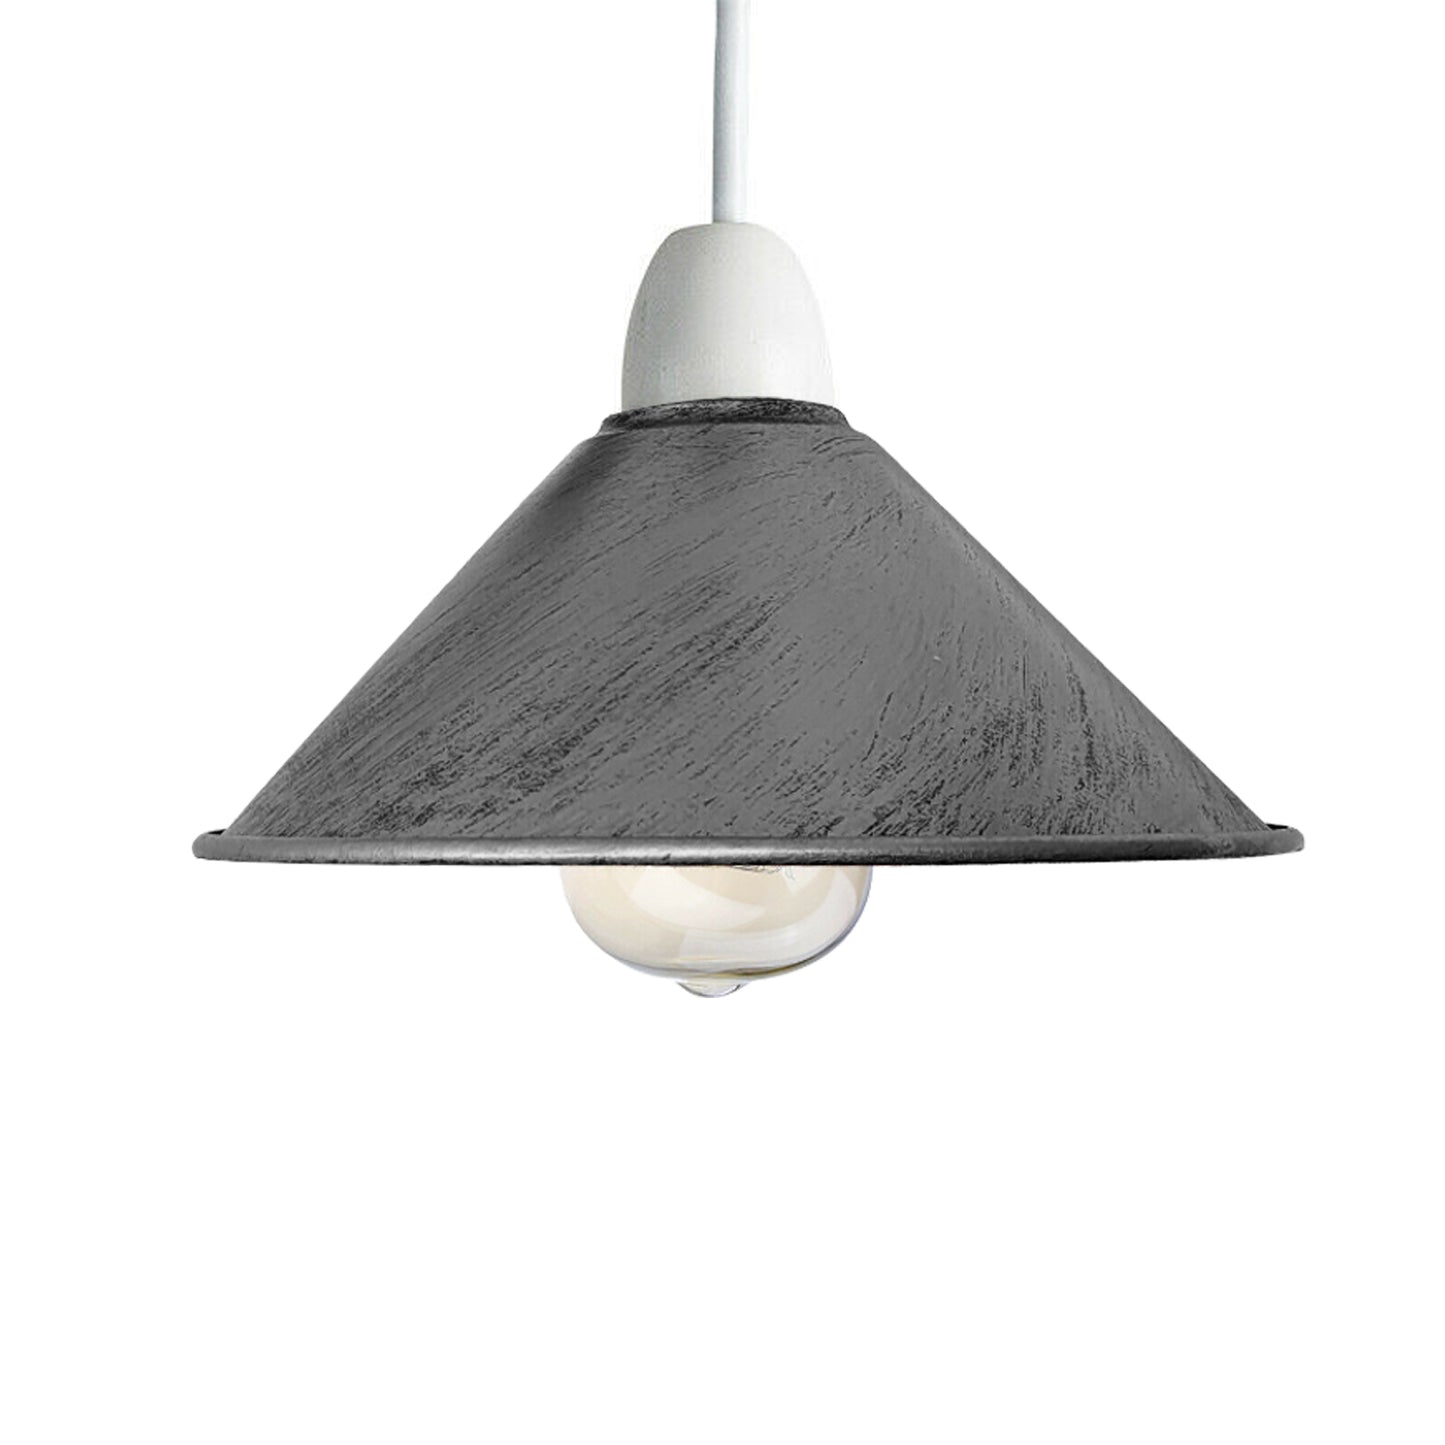 lamp shade - Brushed silver